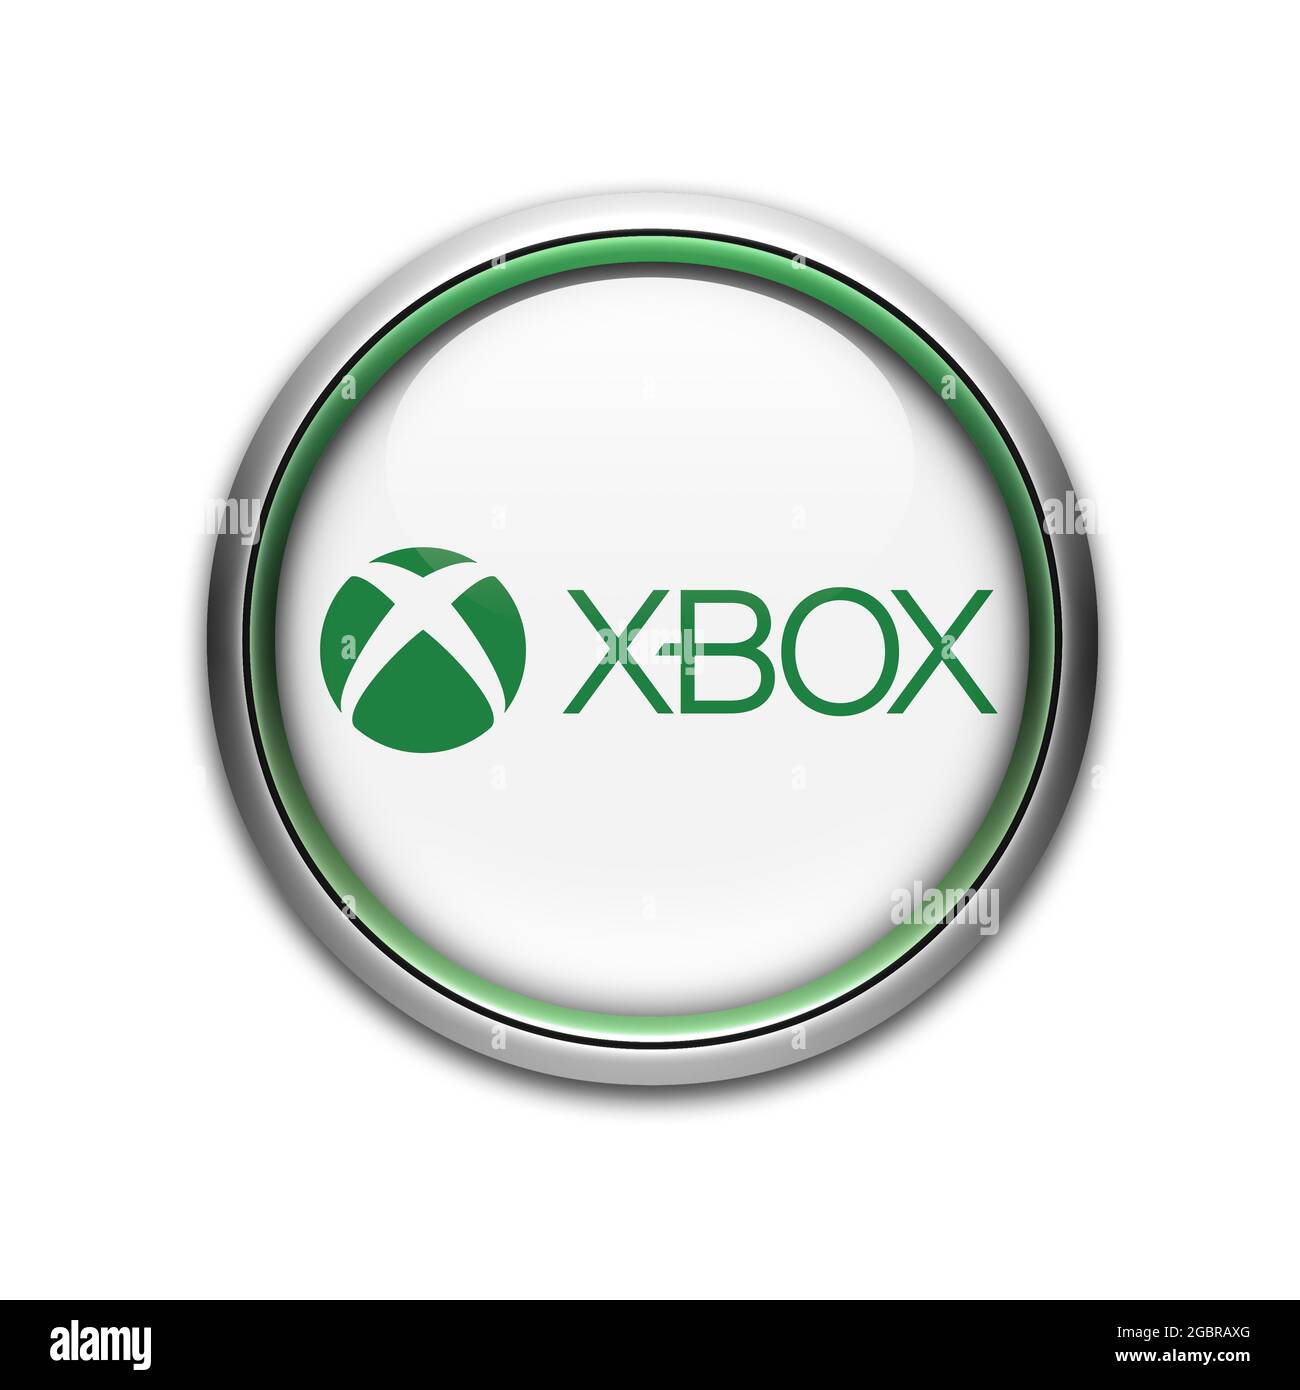 Xbox logo Stock Photo - Alamy